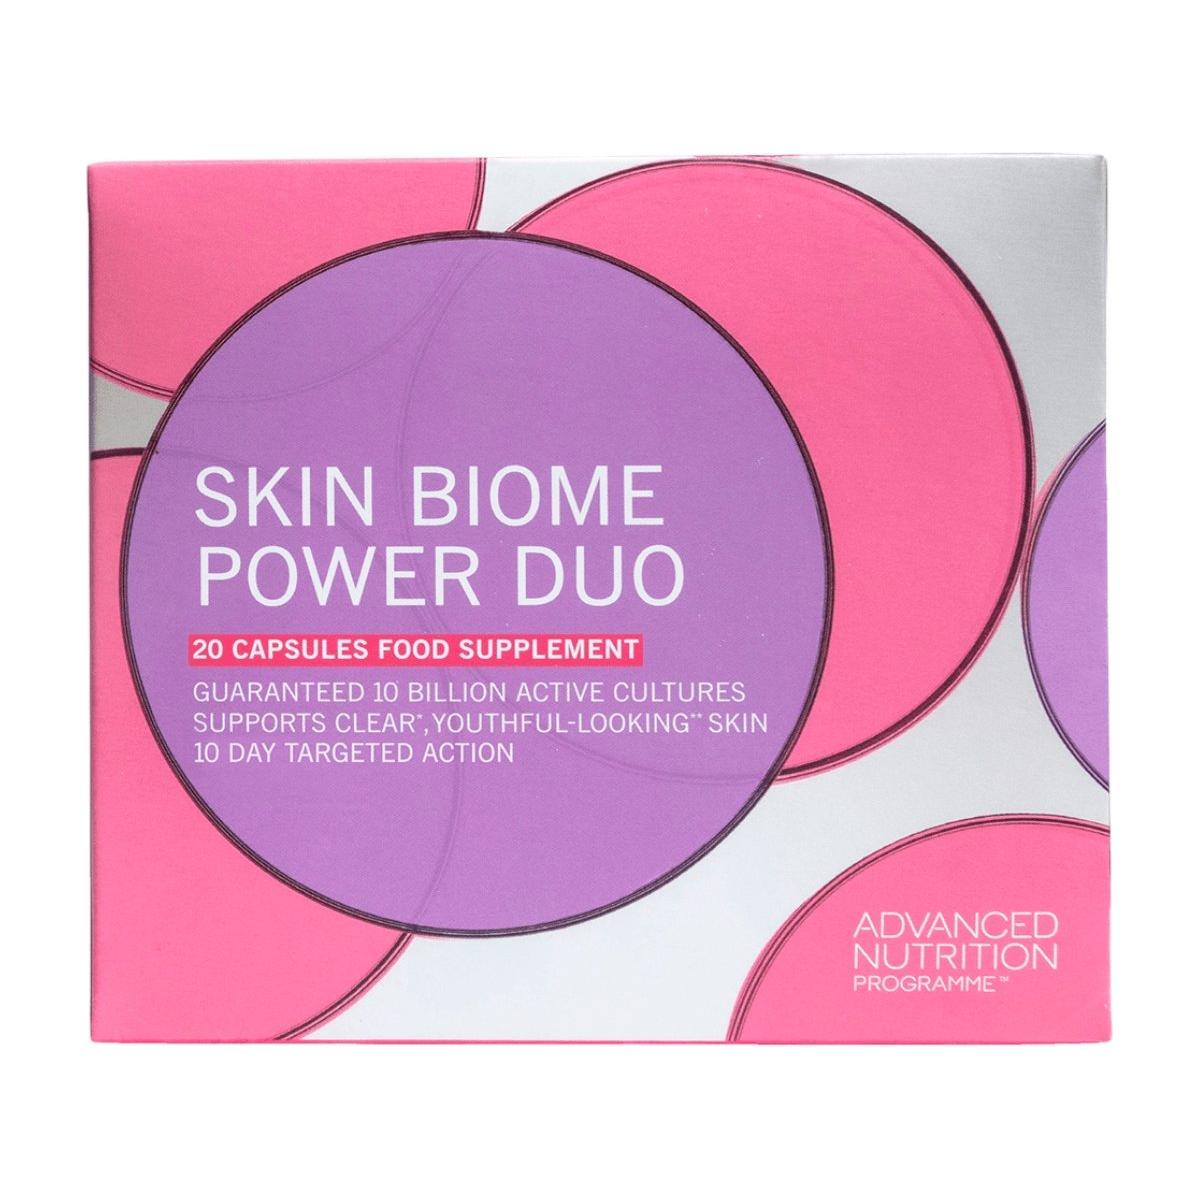 Advanced Nutrition Programme | Skin Biome Power Duo | 20 caps - DG International Ventures Limited